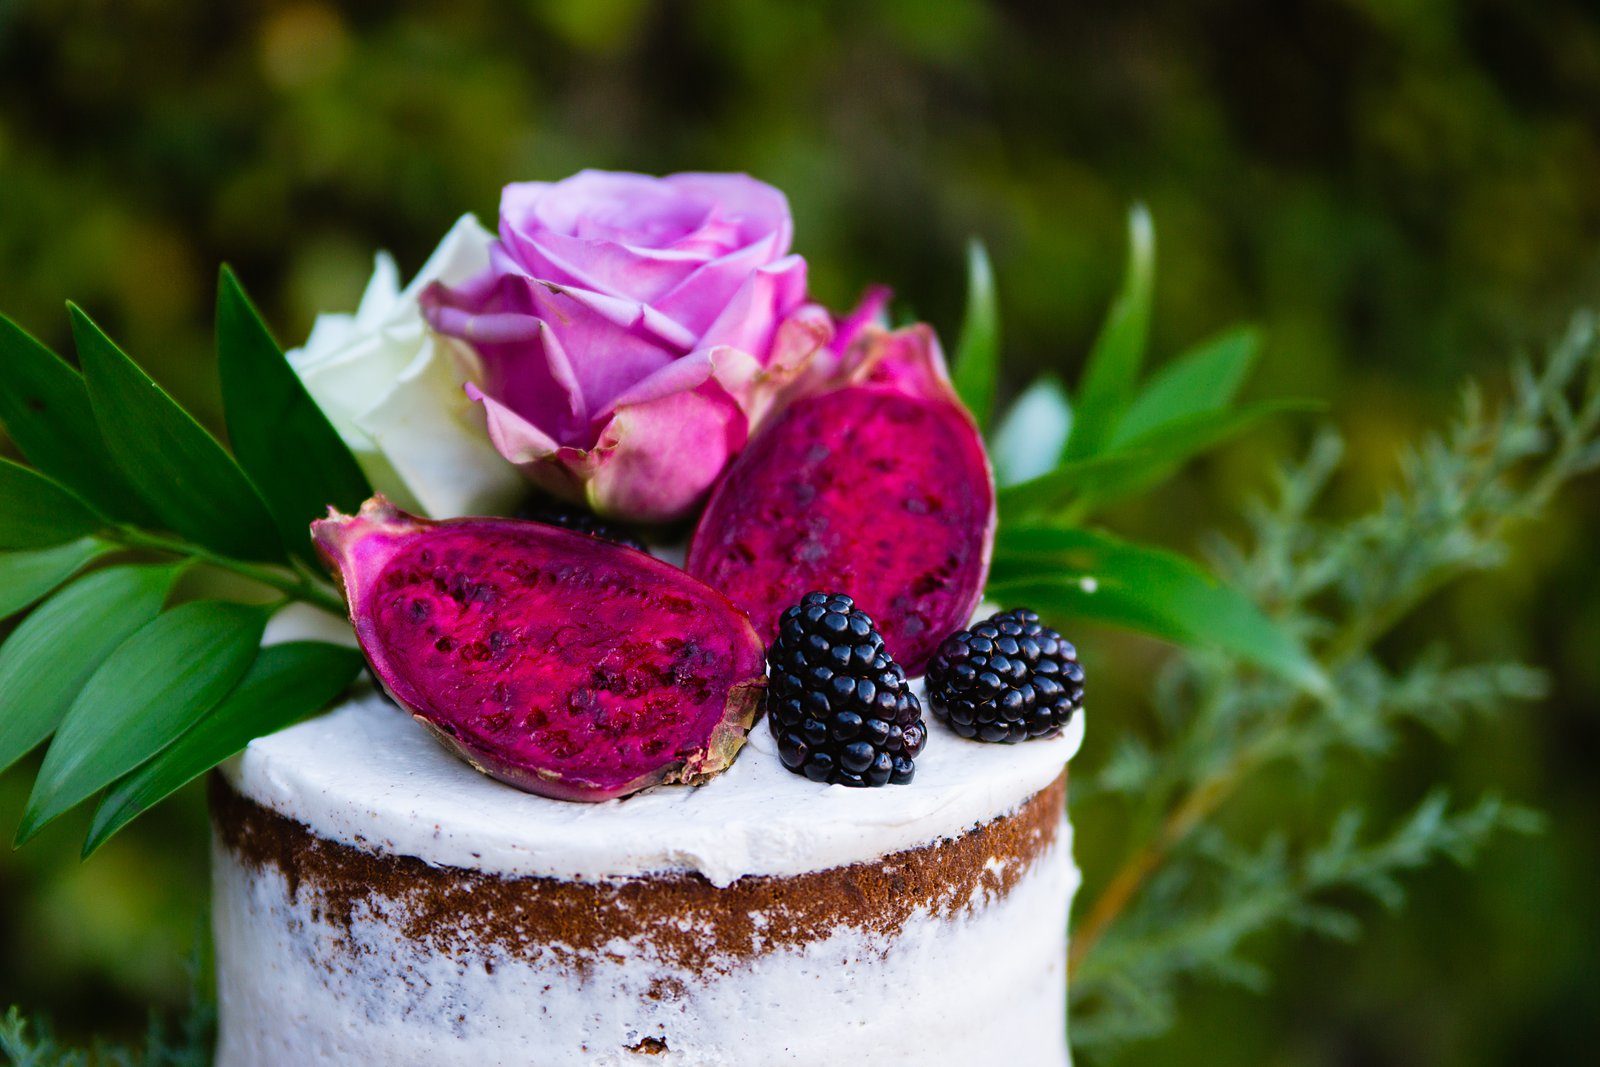 Prickly pear and blackberry wedding cake by Arizona wedding photographer PMA Photography.